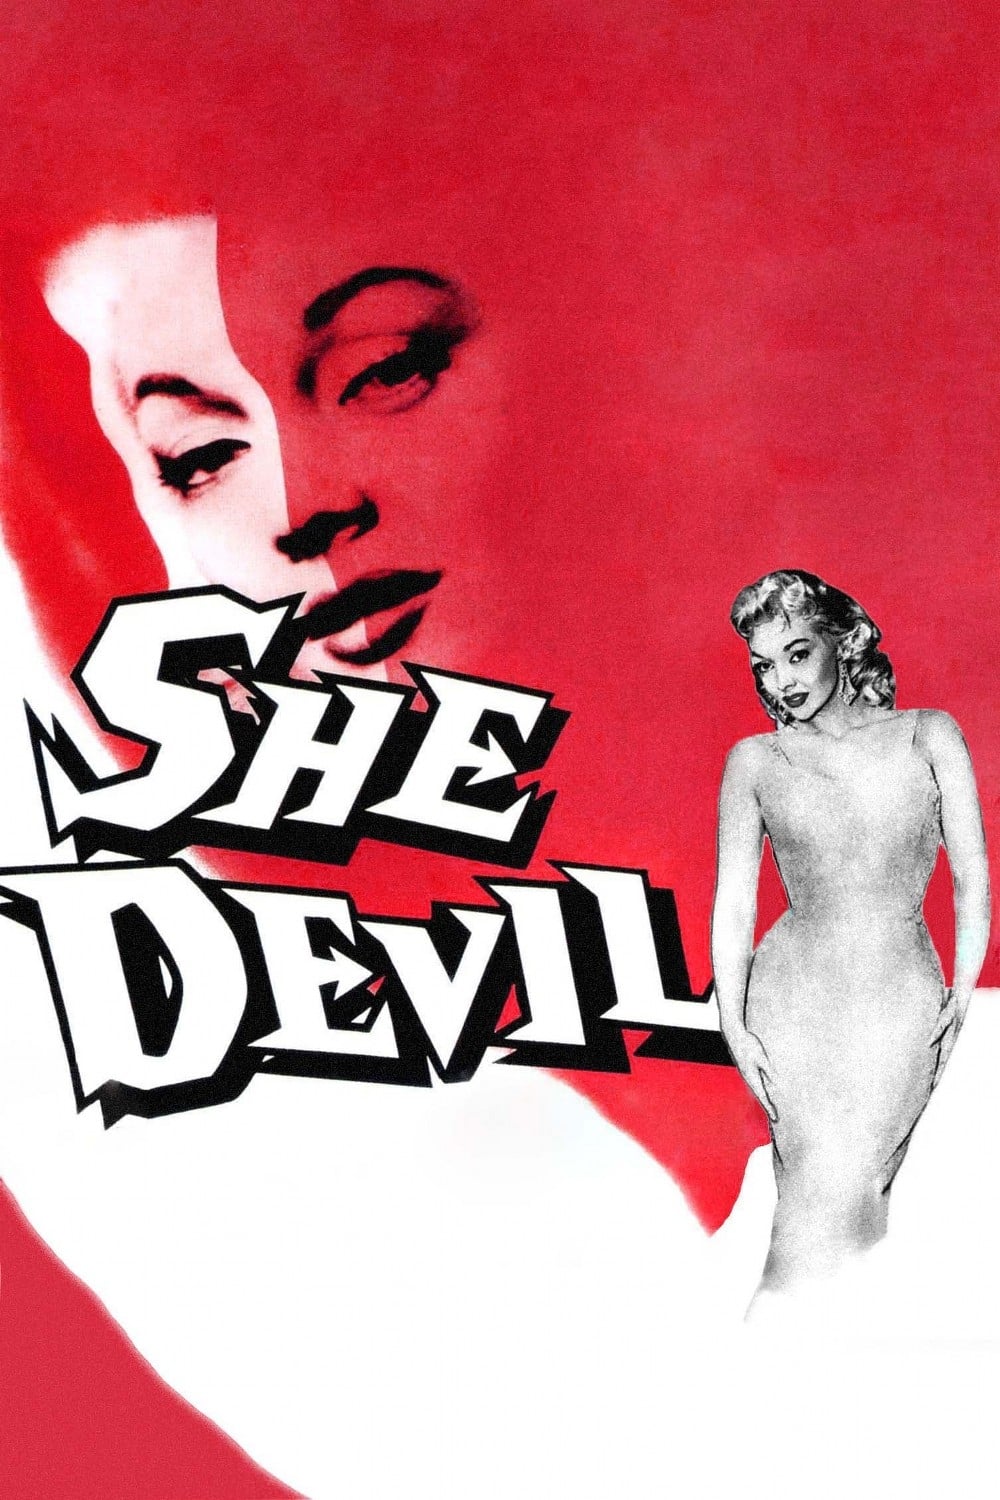 La diabla (She Devil)